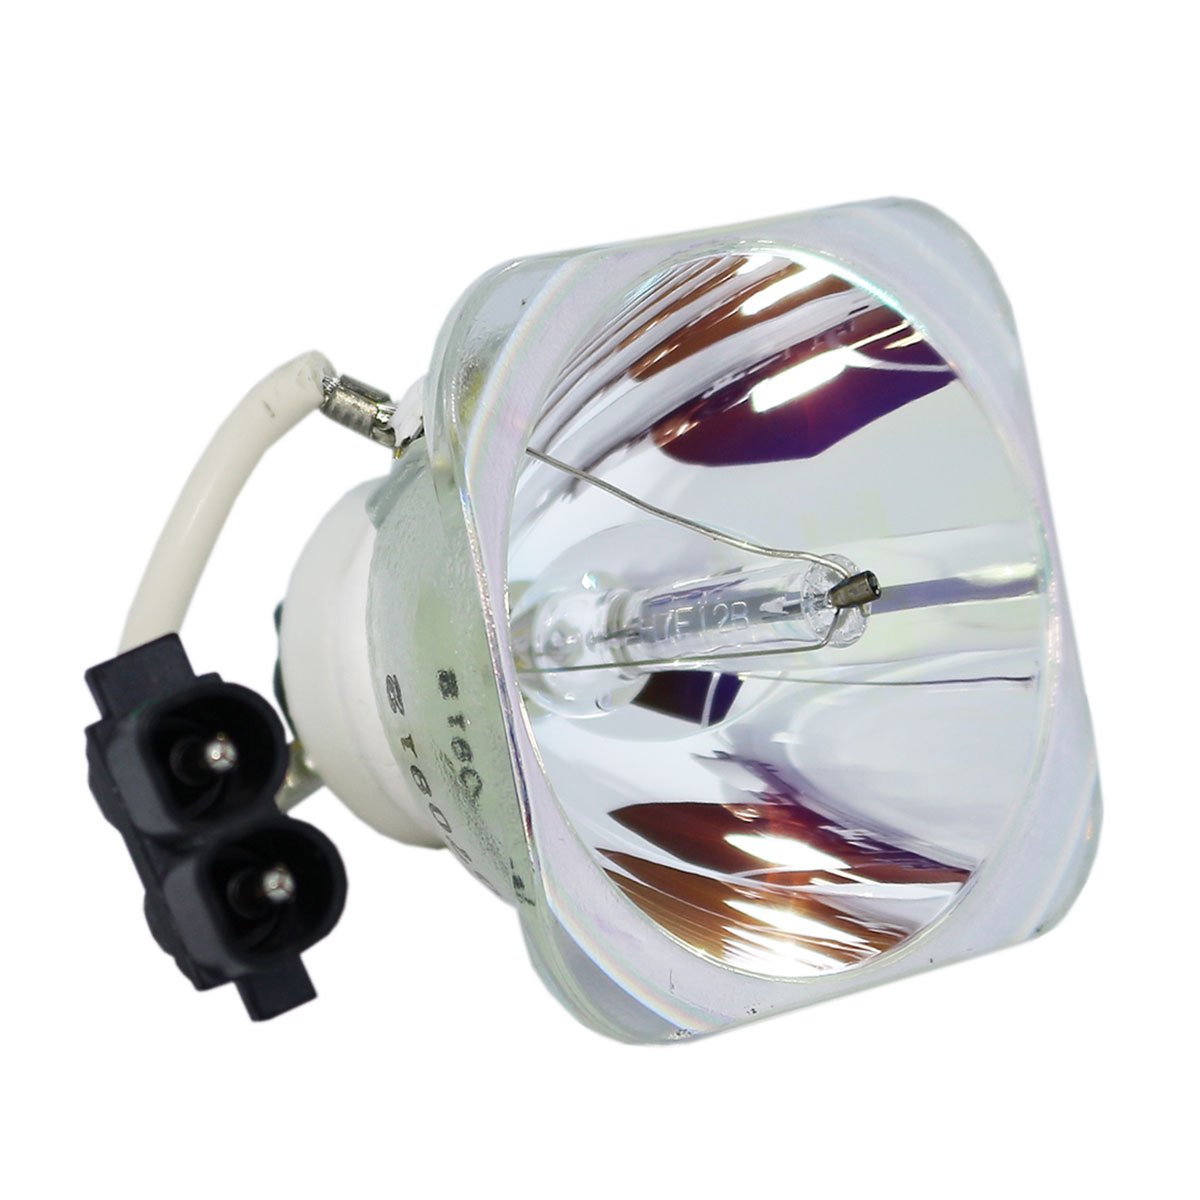 Viewsonic RLC-007 OEM Projector Bare Lamp - $181.50